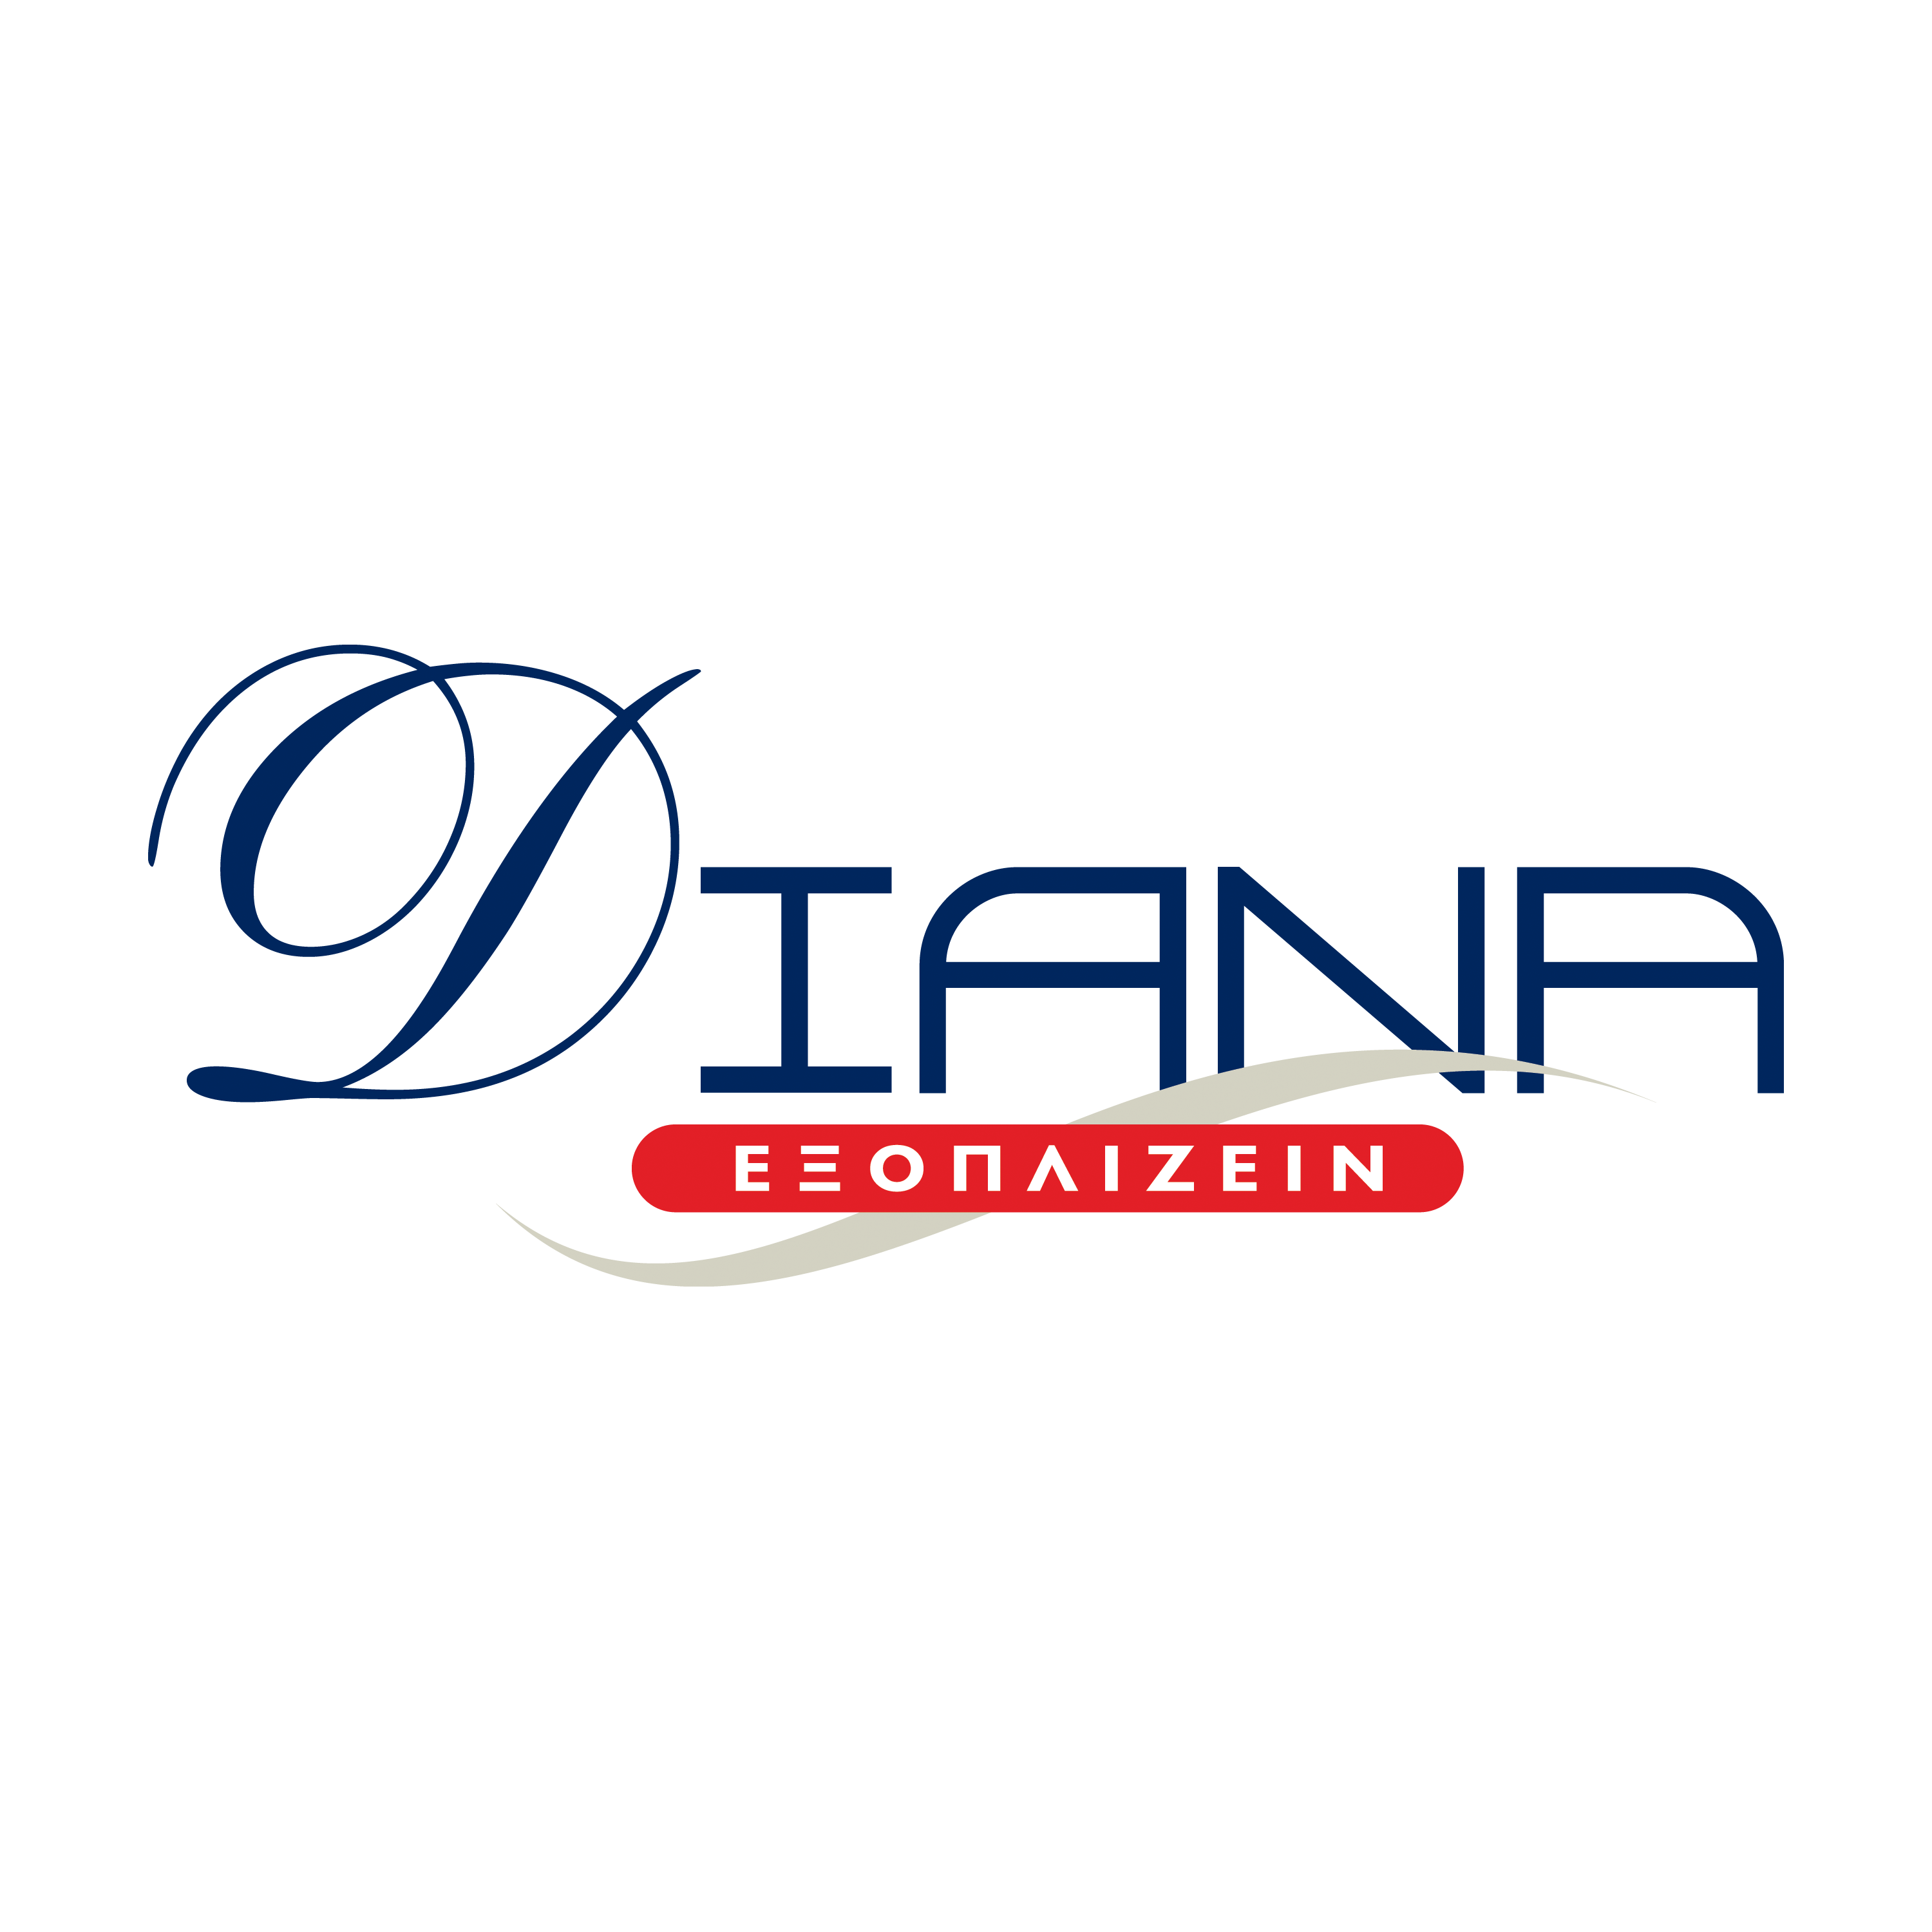 Diana_logo_1166_